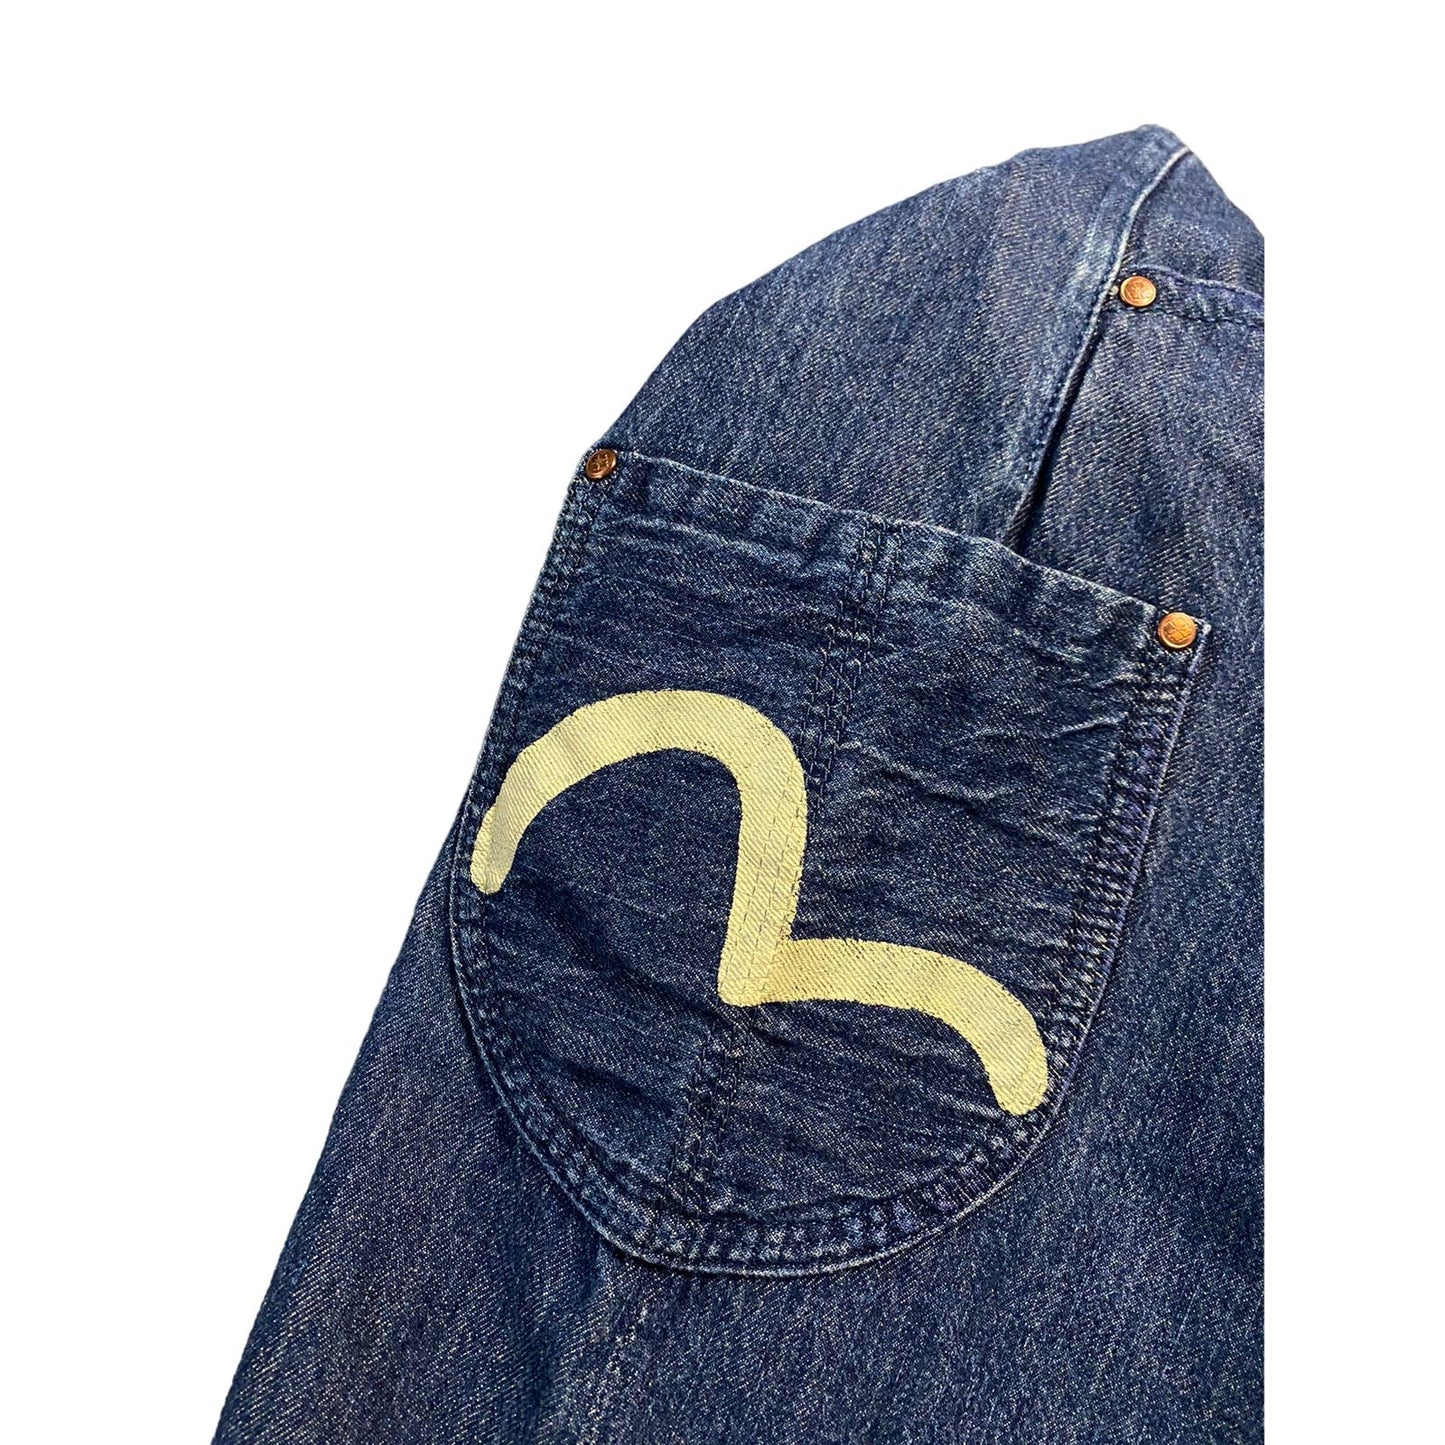 Evisu jeans vintage selvedge denim Yamane rare